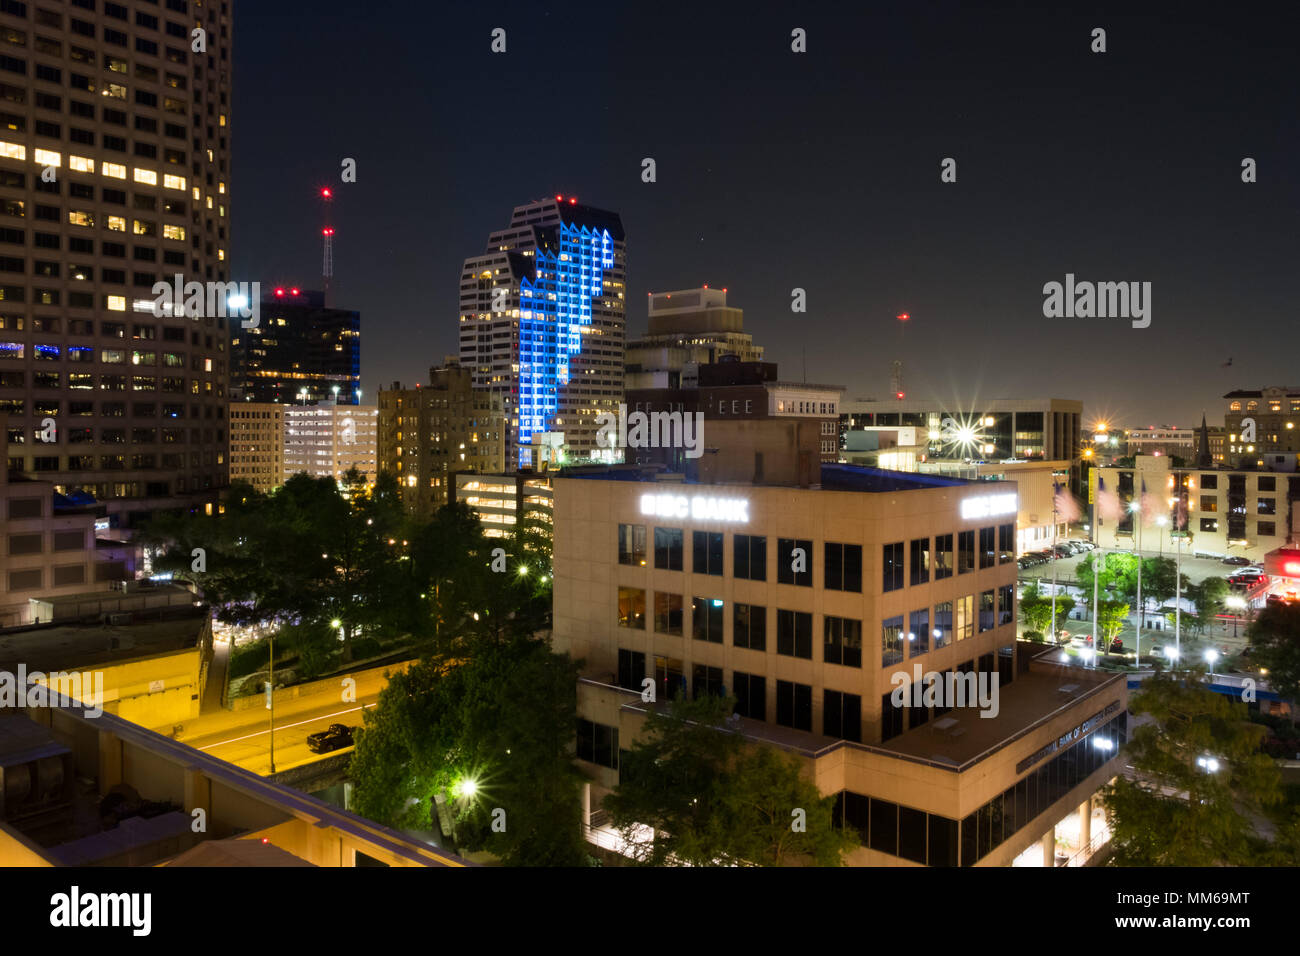 San Antonio, Texas - April 17, 2018: San Antonio city skyline at night shot from the balcony of the Embassy Suites downtown. Stock Photo